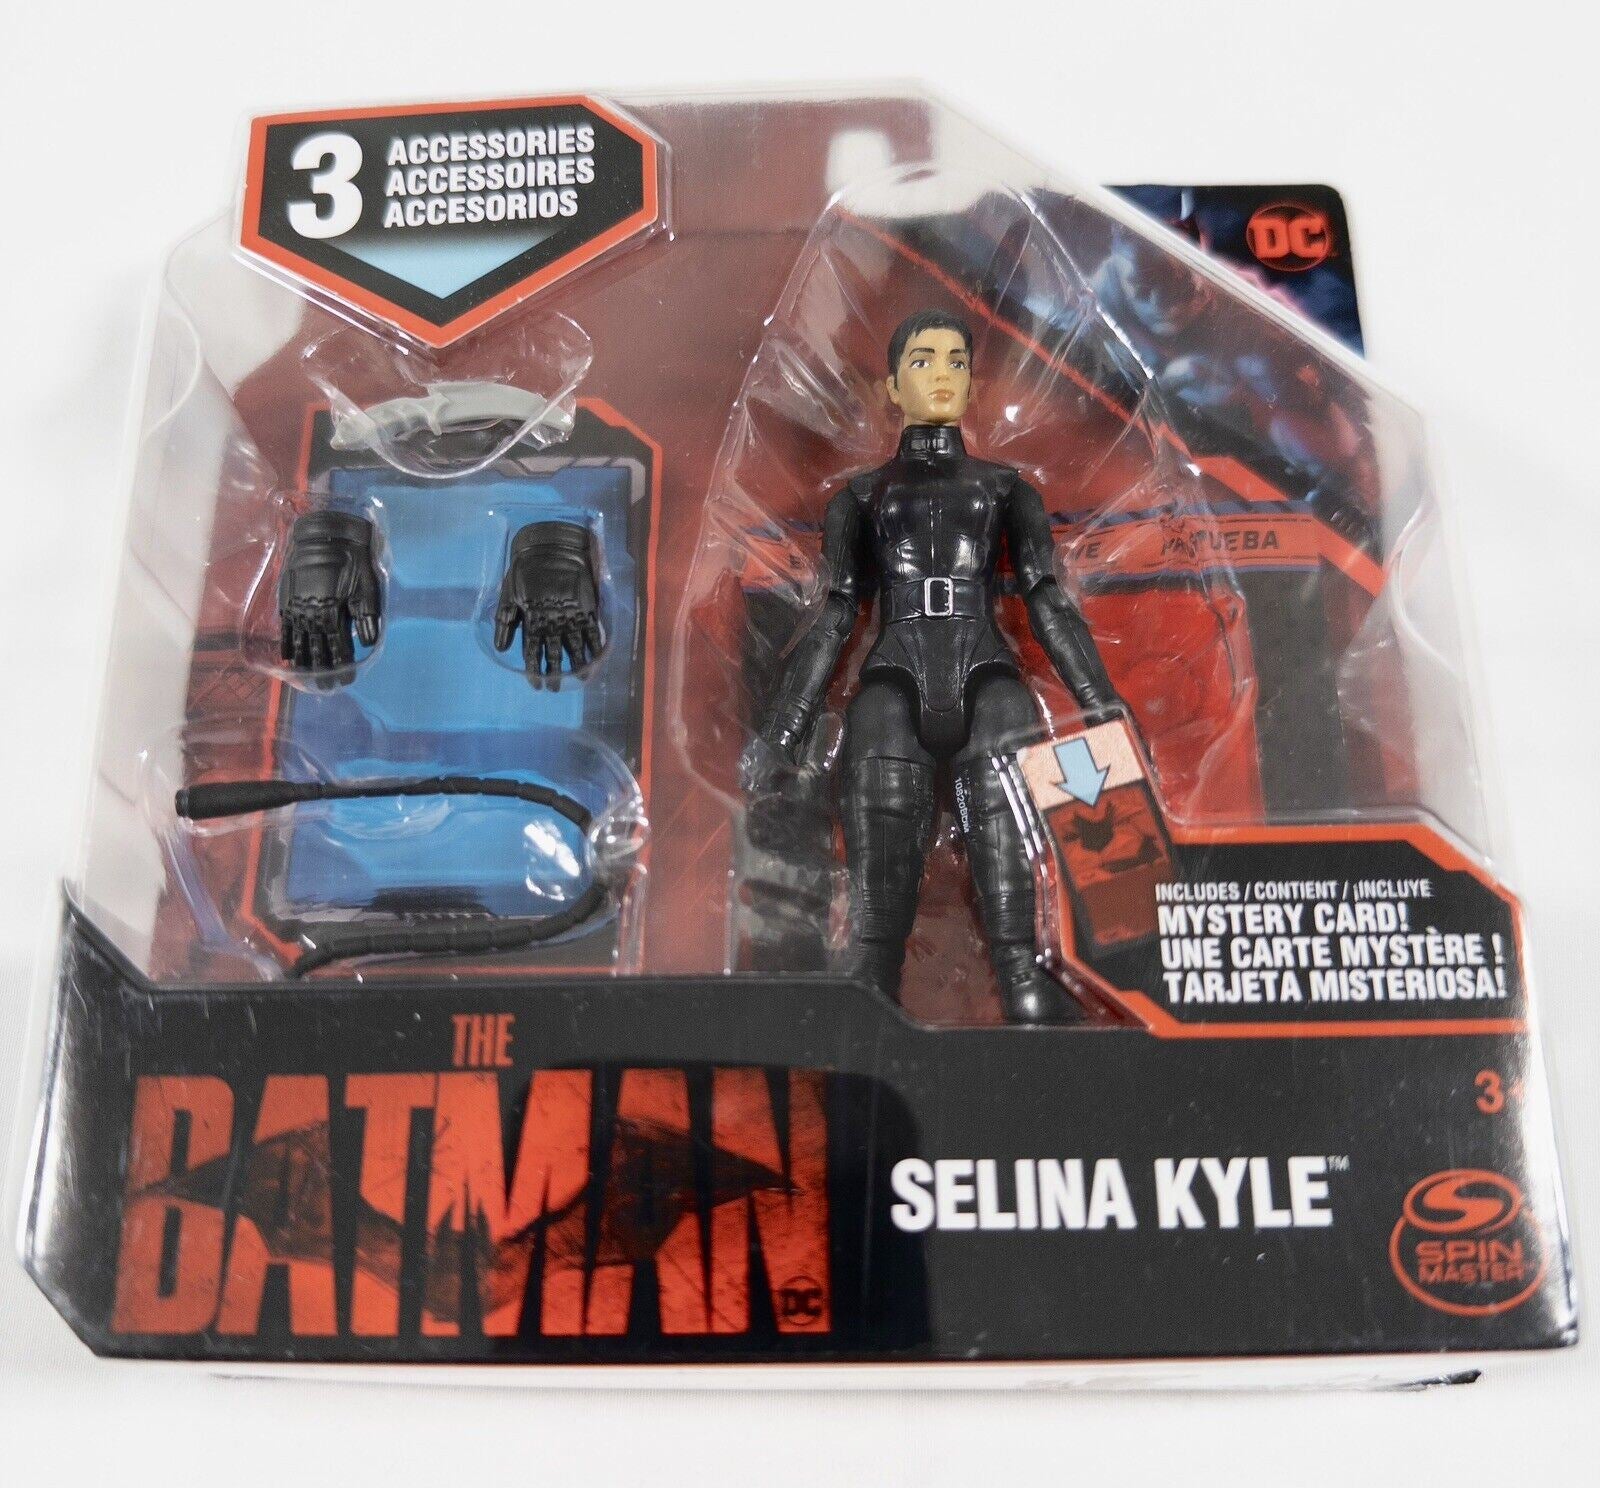 THE BATMAN Selina Kyle Action Figure set Spin Master DC